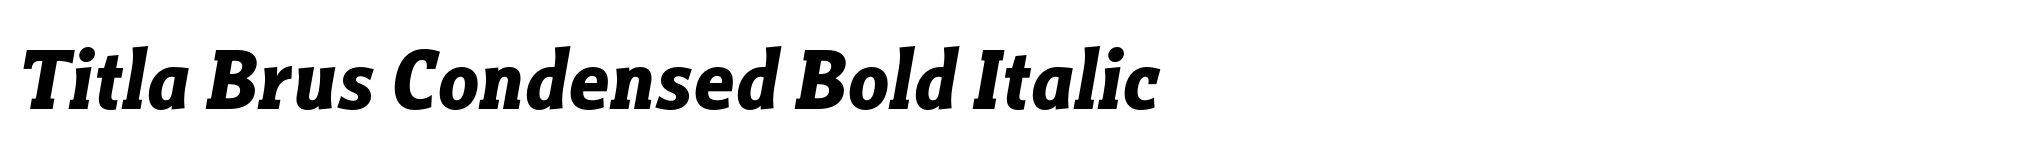 Titla Brus Condensed Bold Italic image